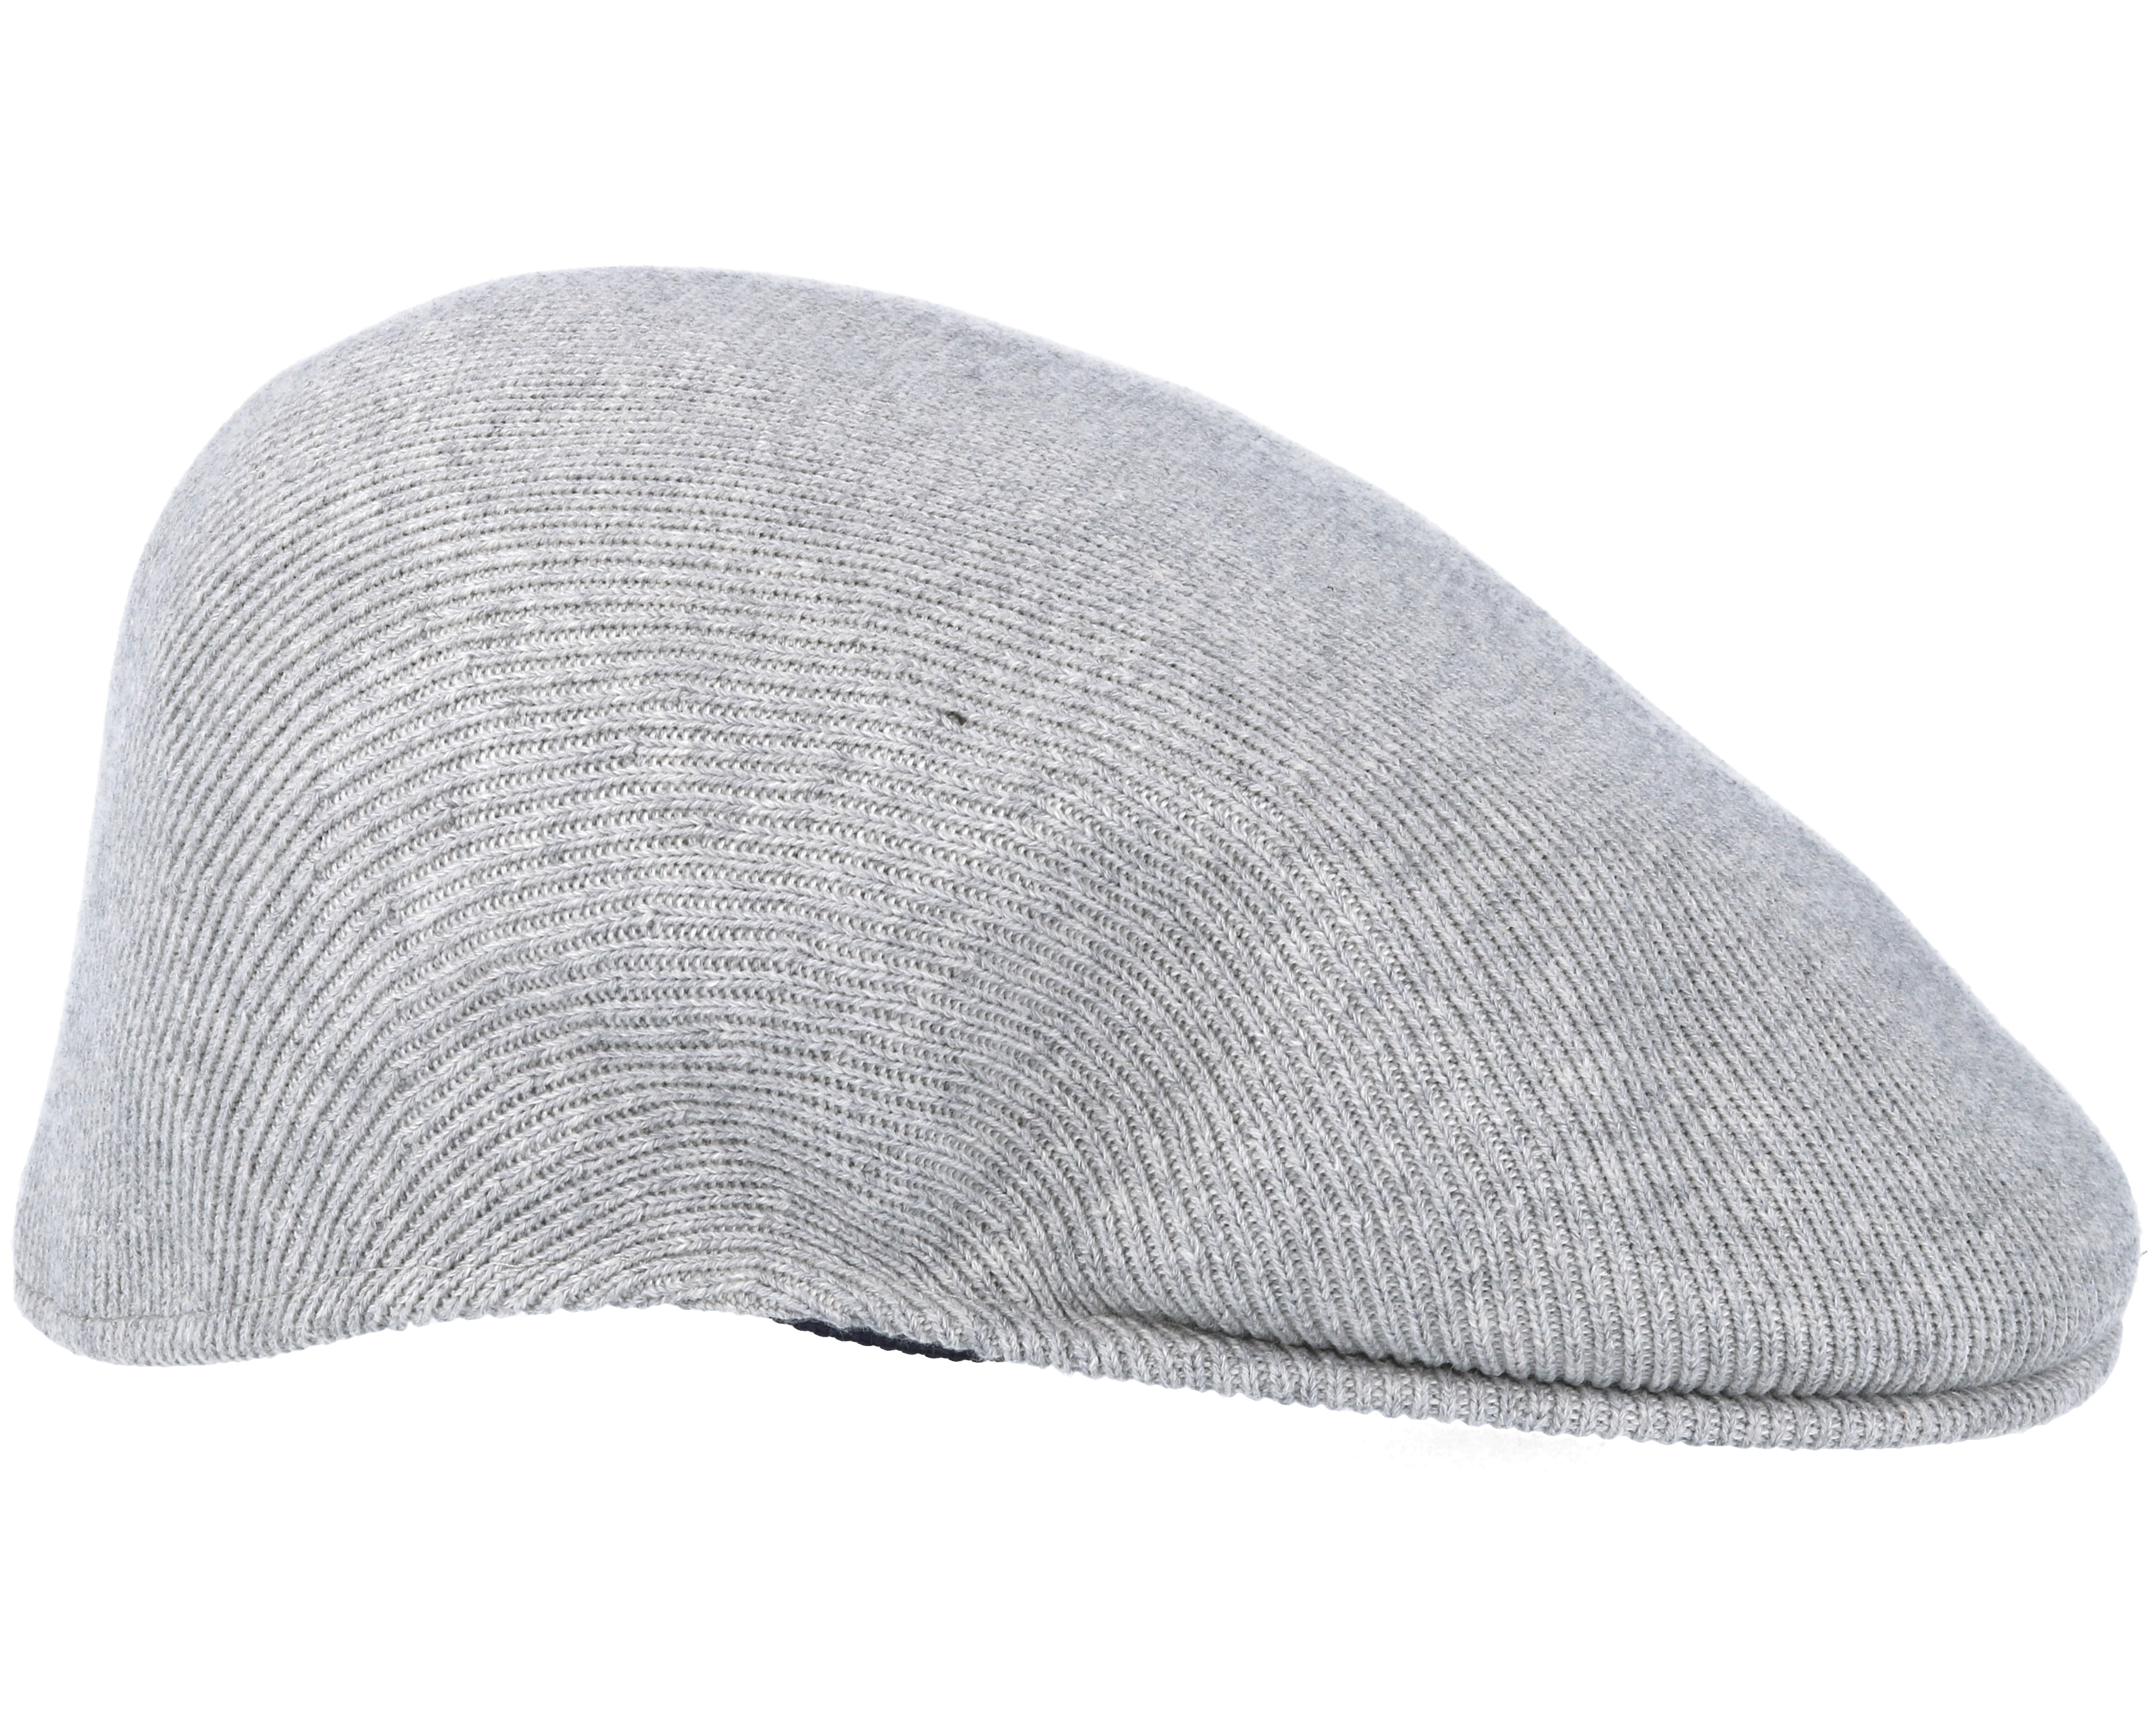 Cotton Rib 504 Grey Flat Cap - Kangol caps | Hatstore.co.uk